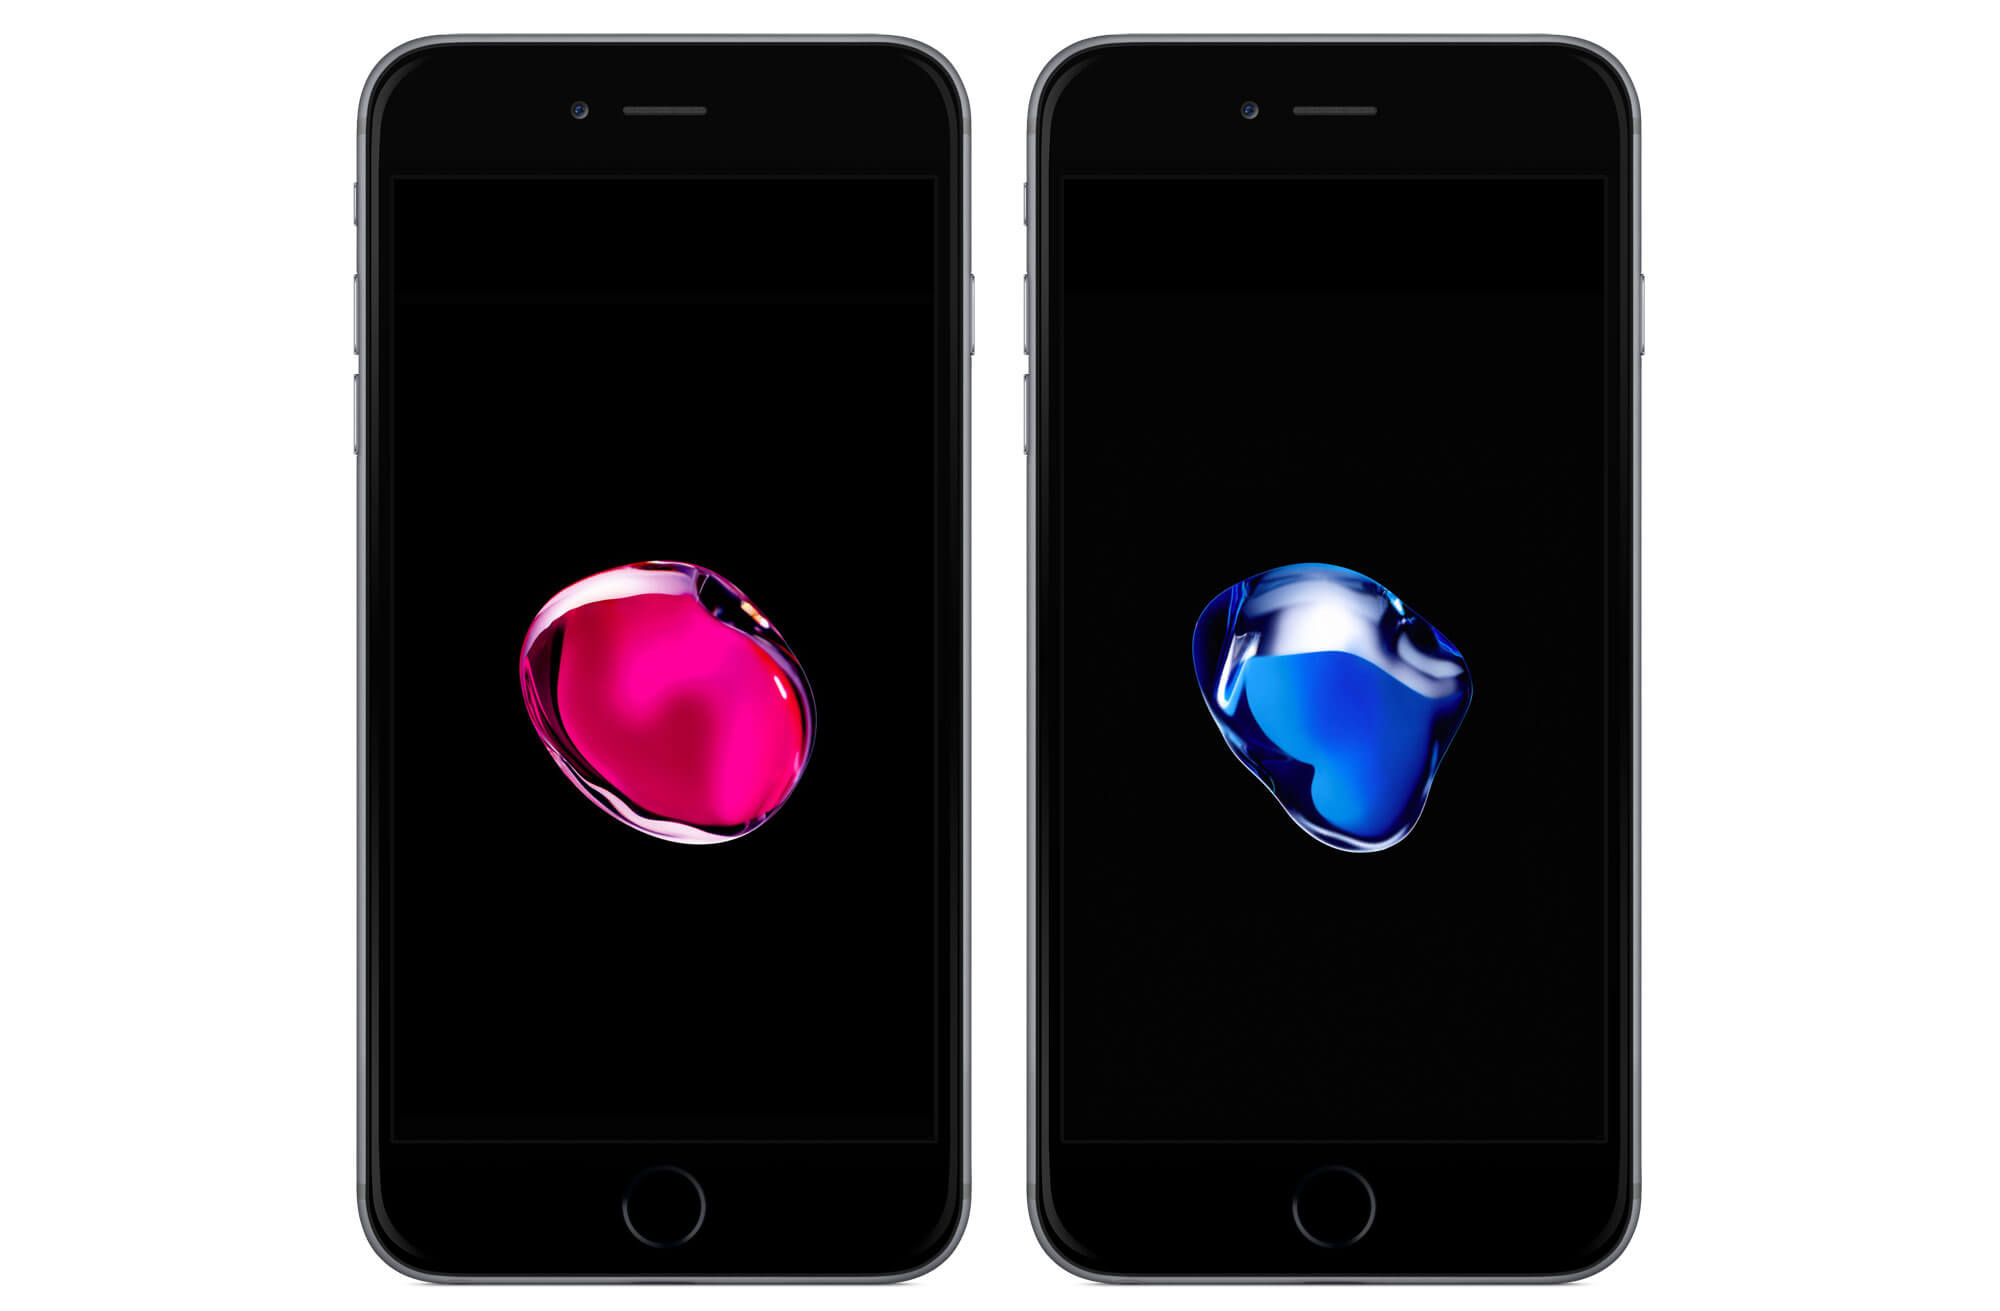 Apple iPhone 8 Plus оснастят OLED-дисплеем от Sharp